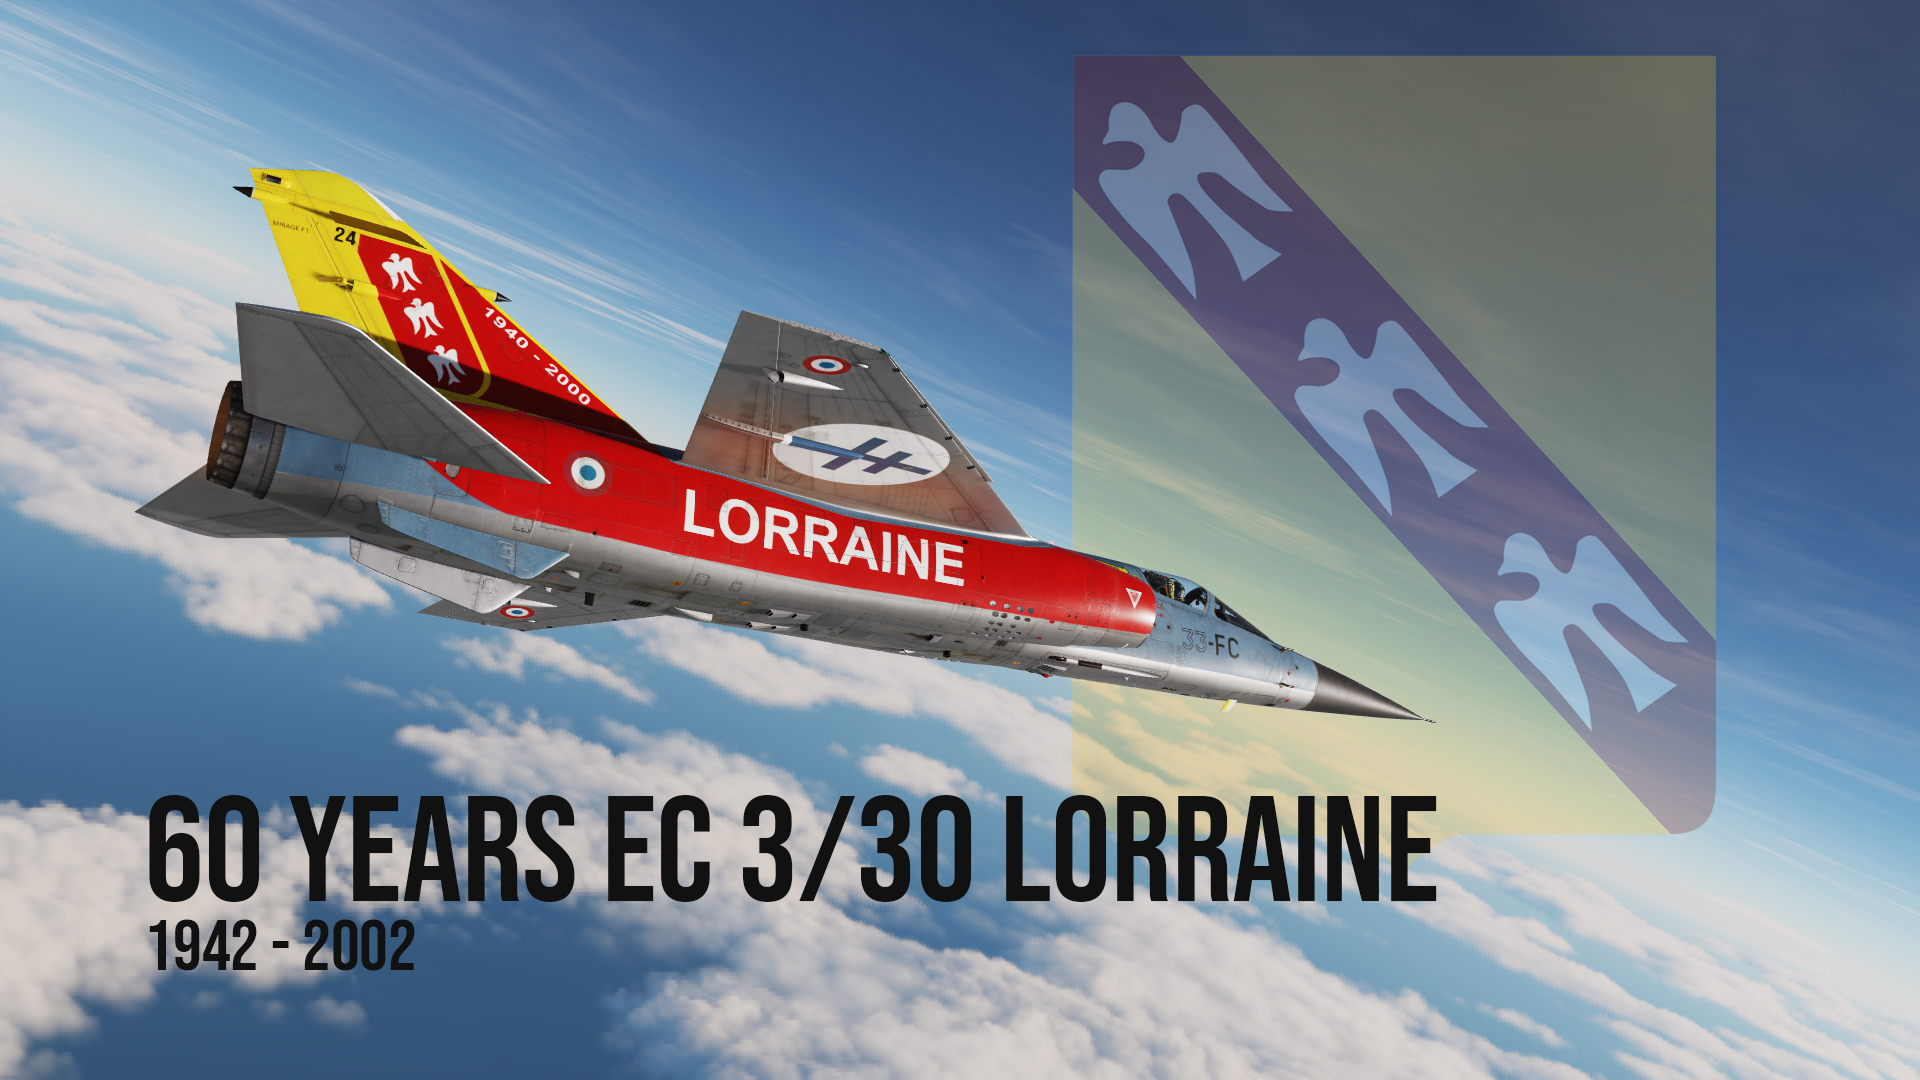 Mirage F-1C, 60 years of EC 3/30 Lorraine, 1940-2000 - V1.1